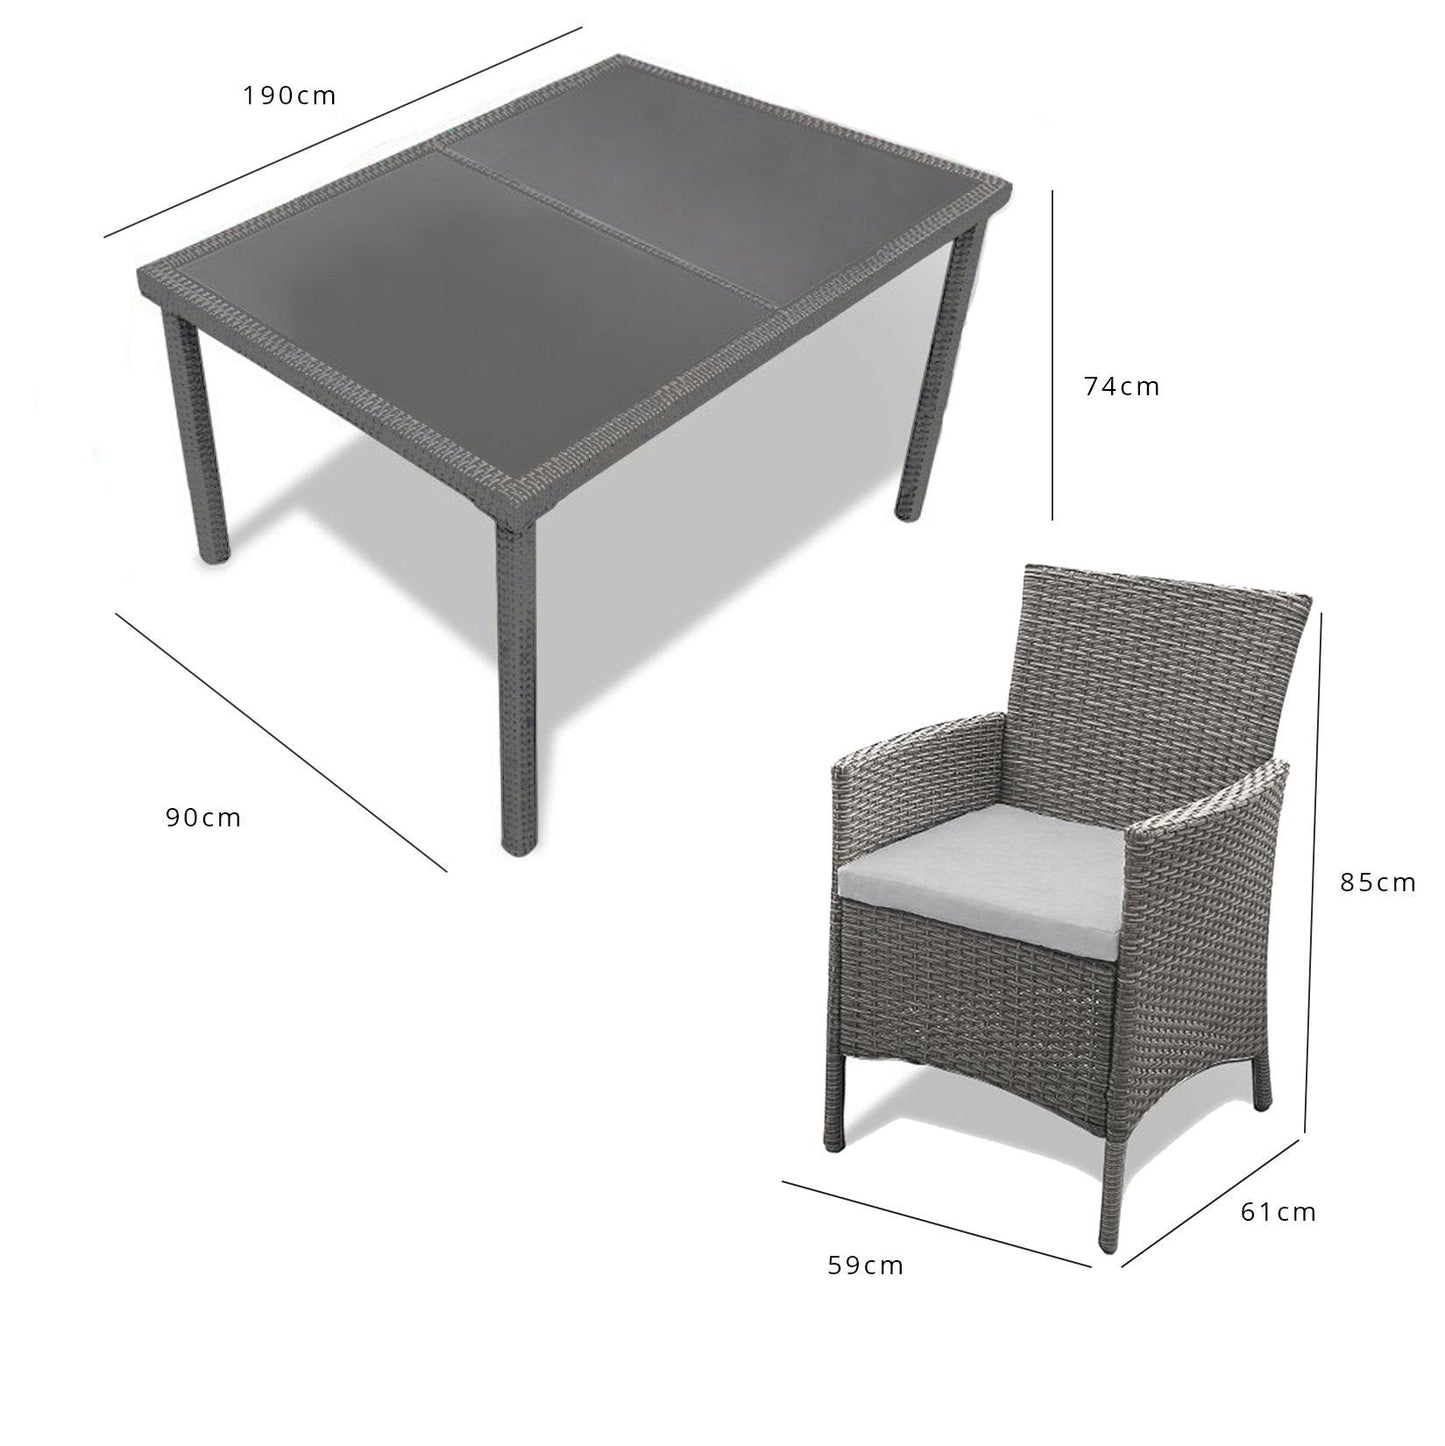 Marston 8 Seater Rattan Outdoor Dining Set with Grey Parasol - Rattan Garden Furniture - Grey - Glass Top